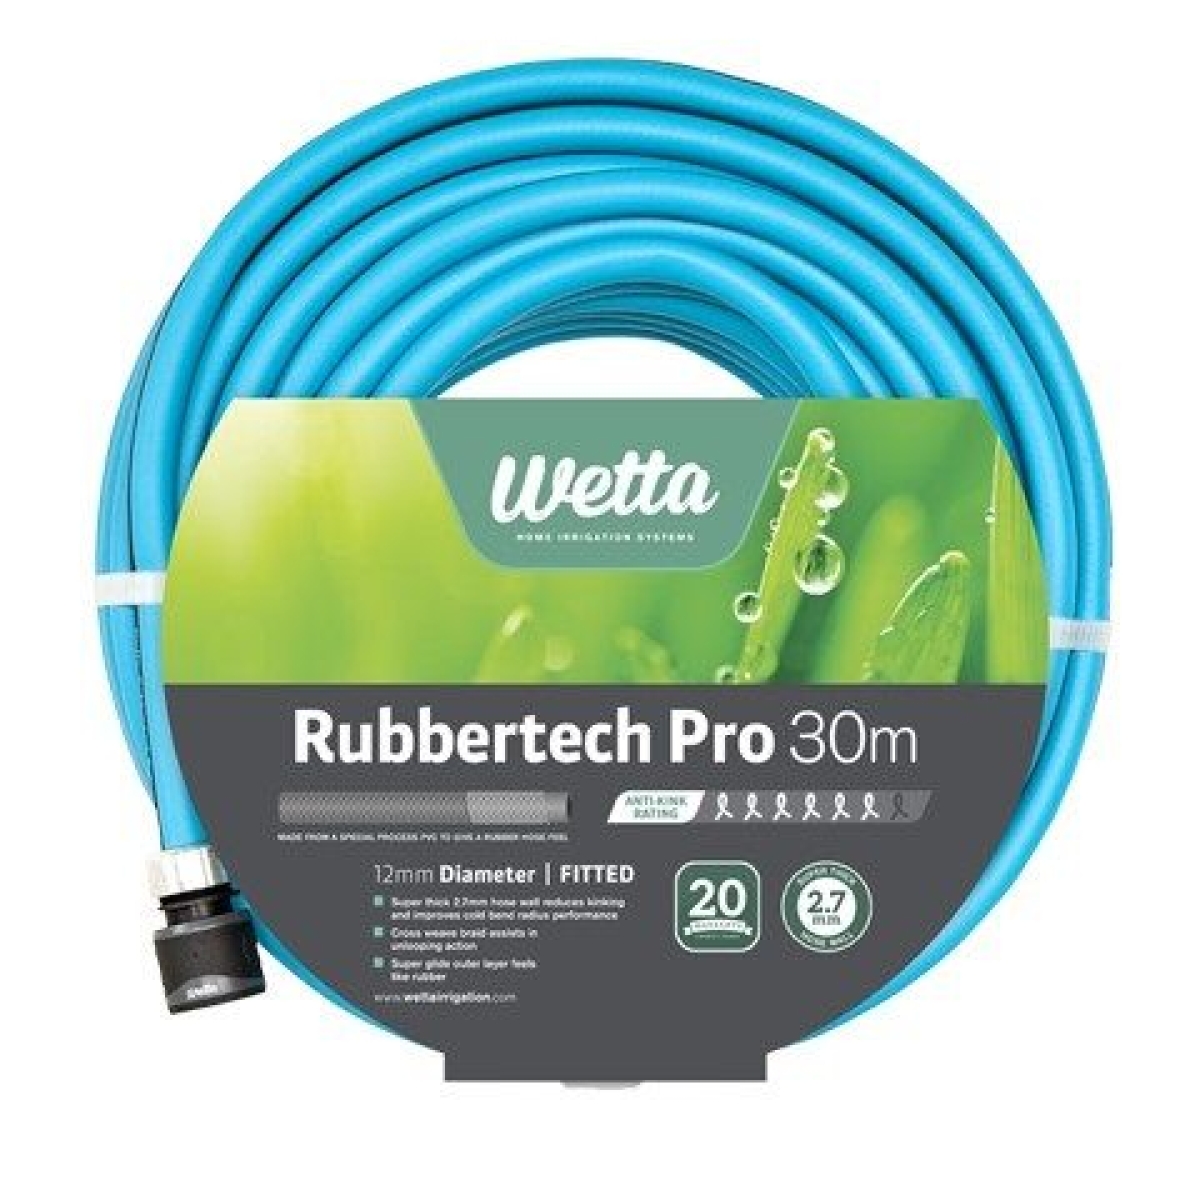 Wetta Rubbertech Pro Hose 12mm Fitted